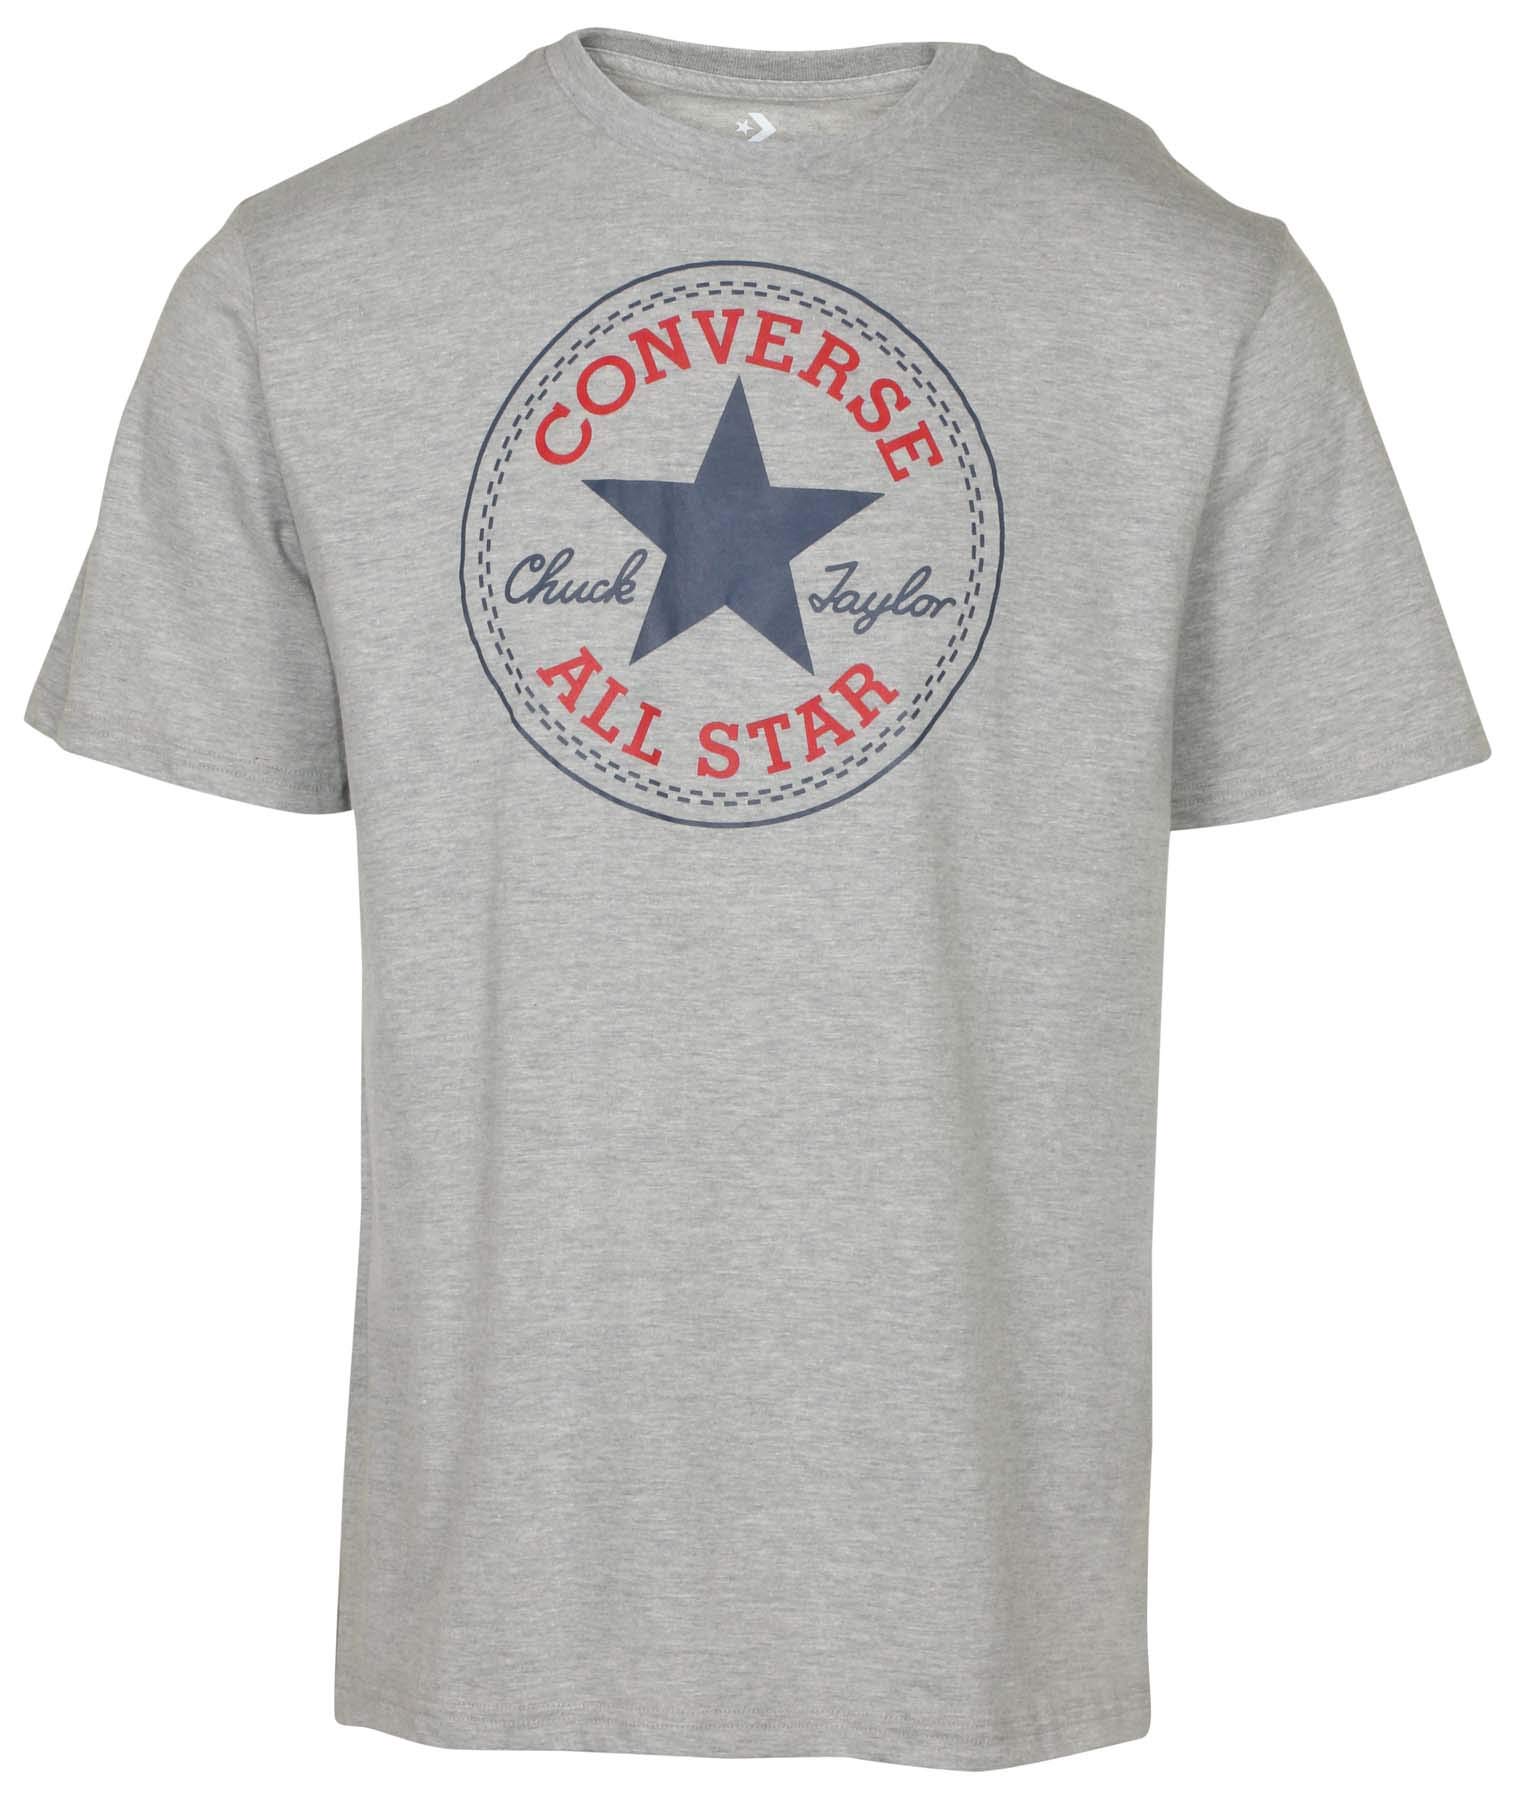 Converse Men's All Star Chuck Taylor Patch Logo Tee